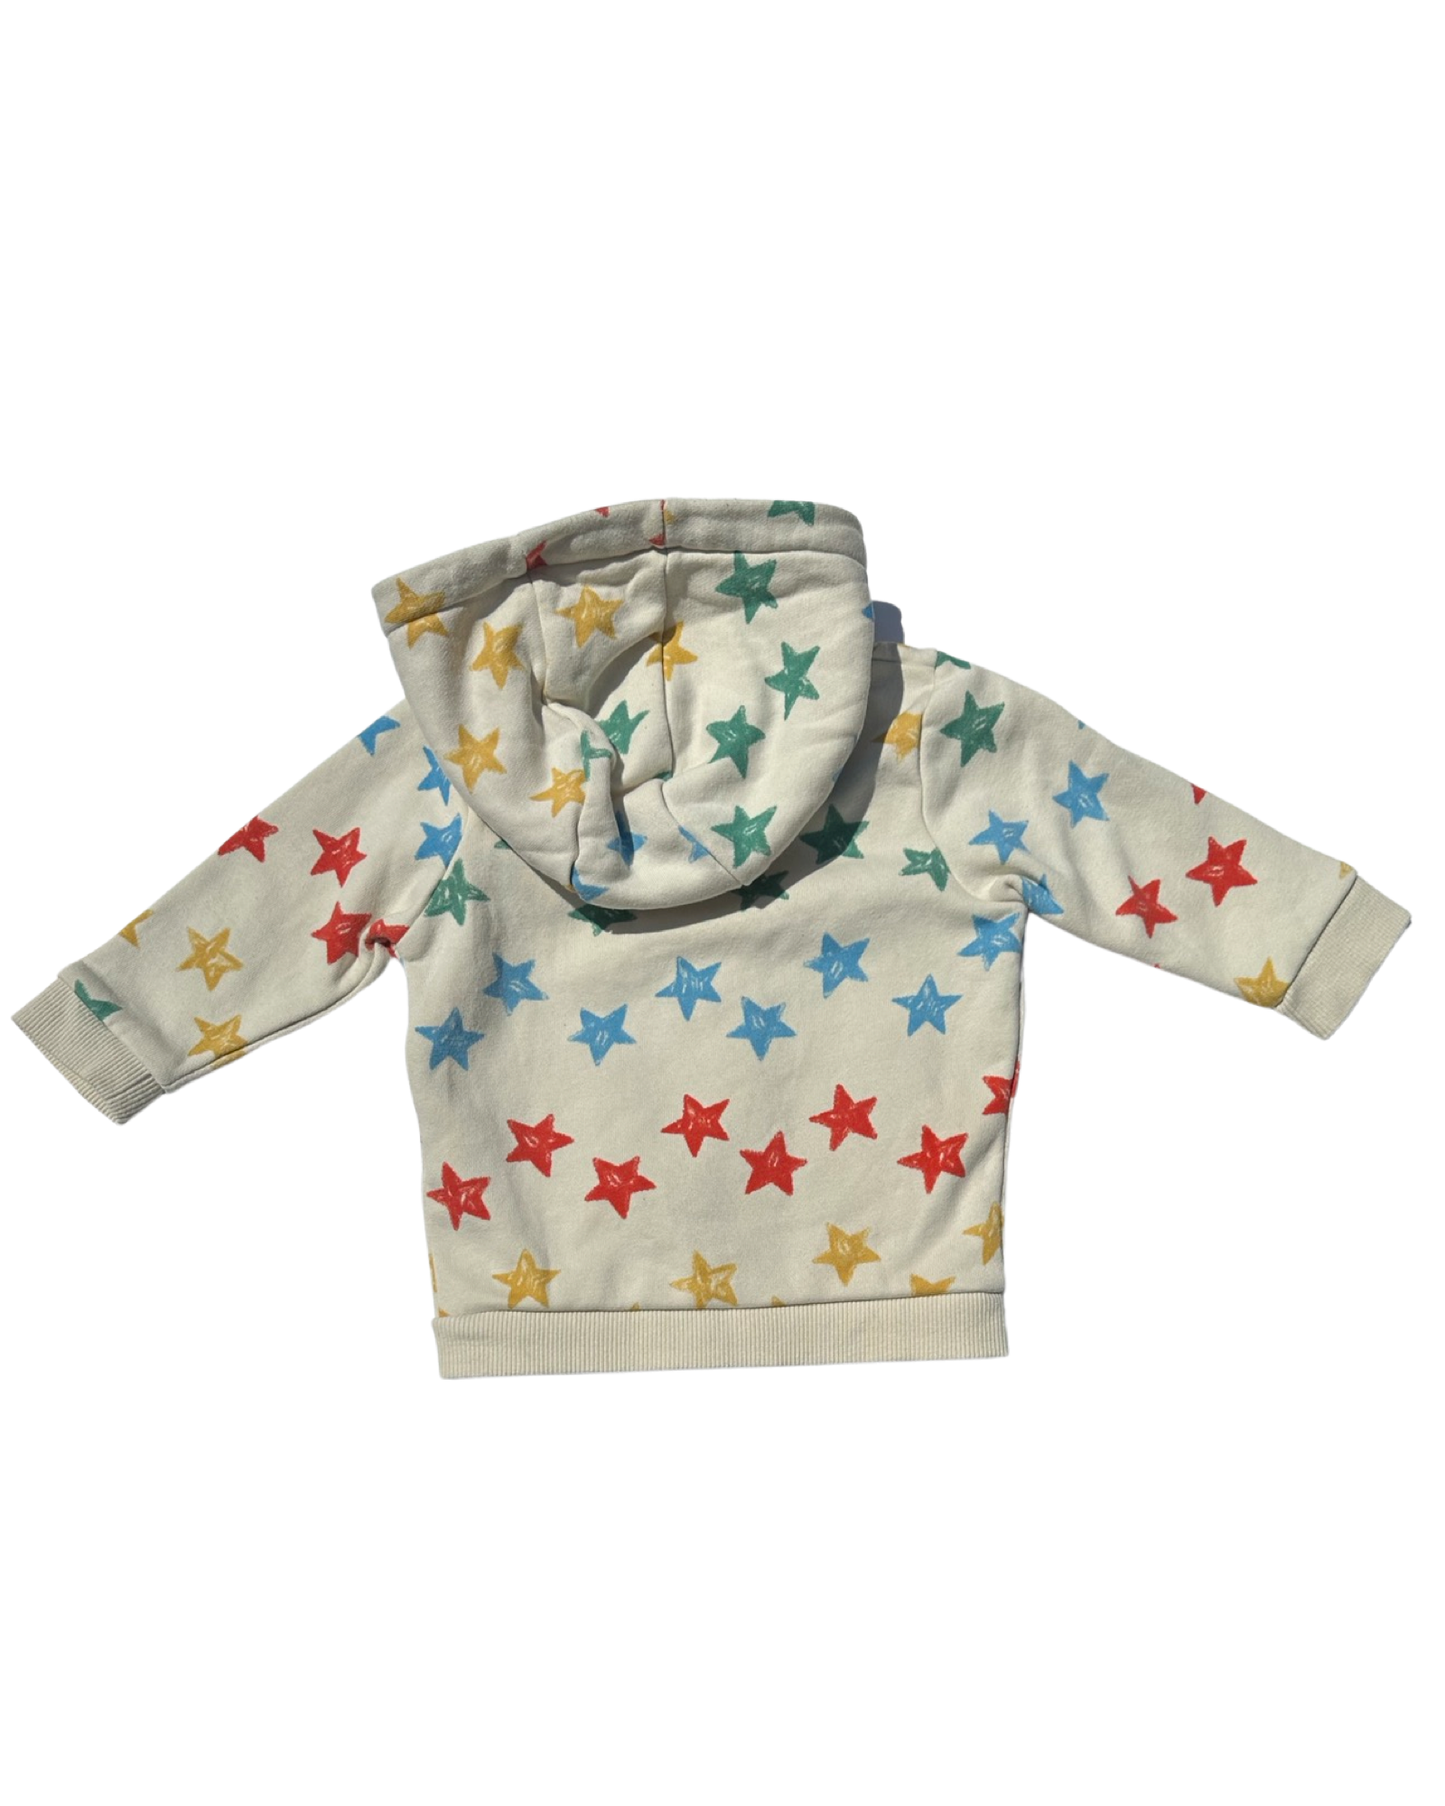 M&S star print hoodie (size 3-6mths)